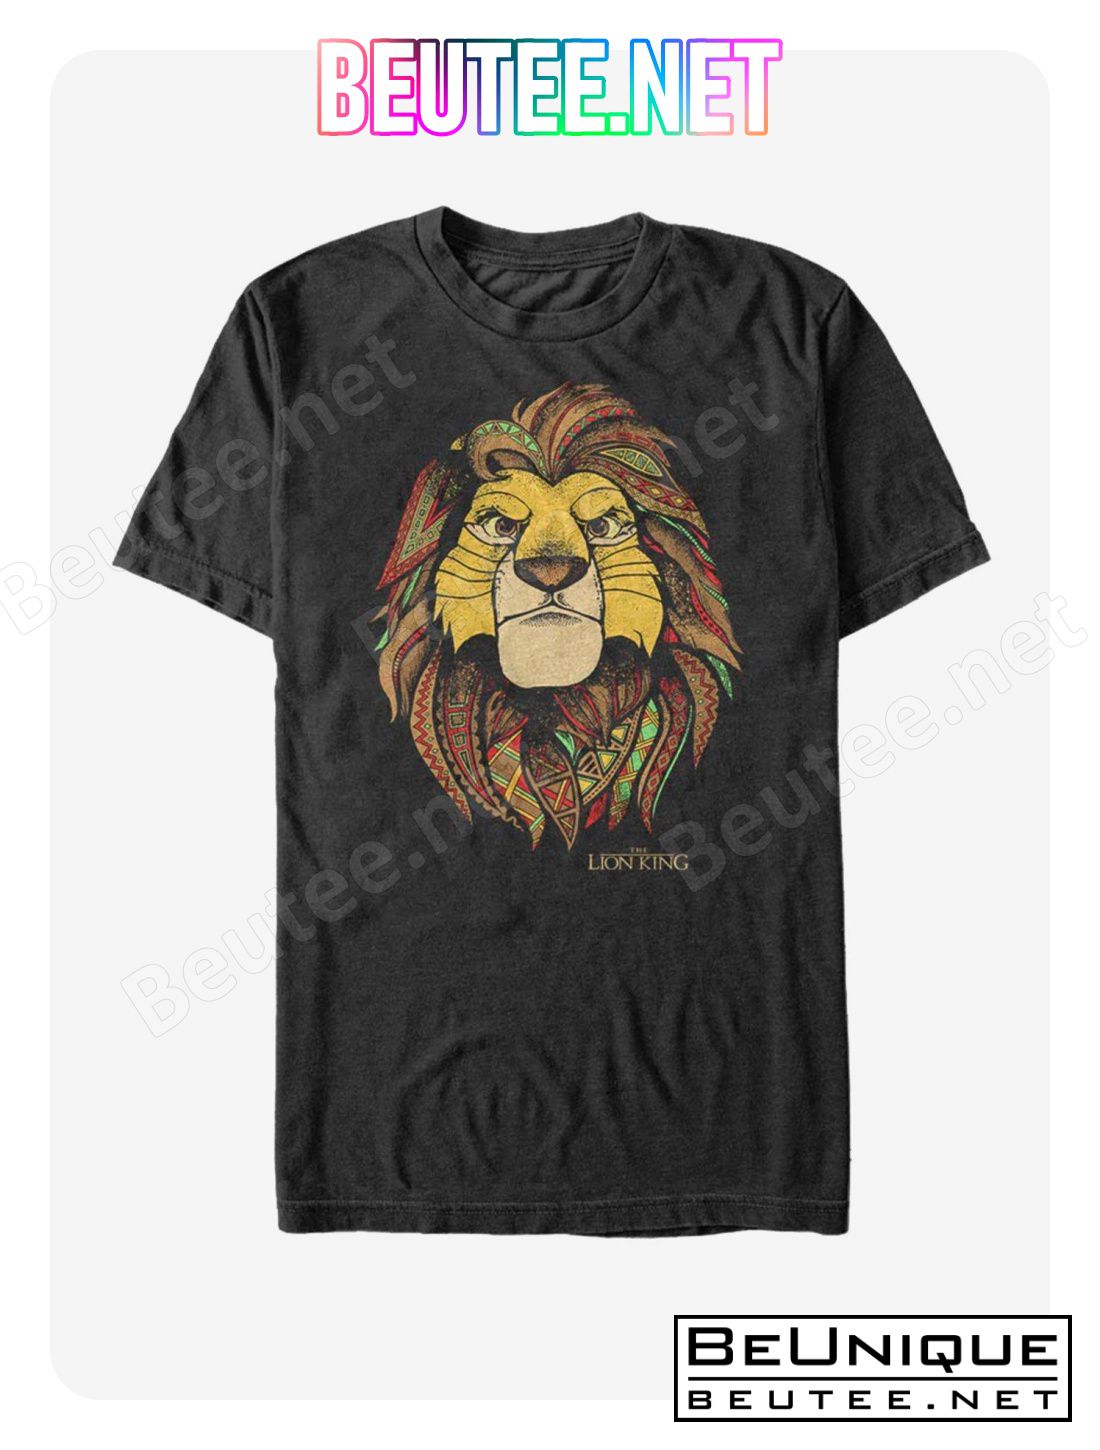 Disney The Lion King Africa Lion T-Shirt